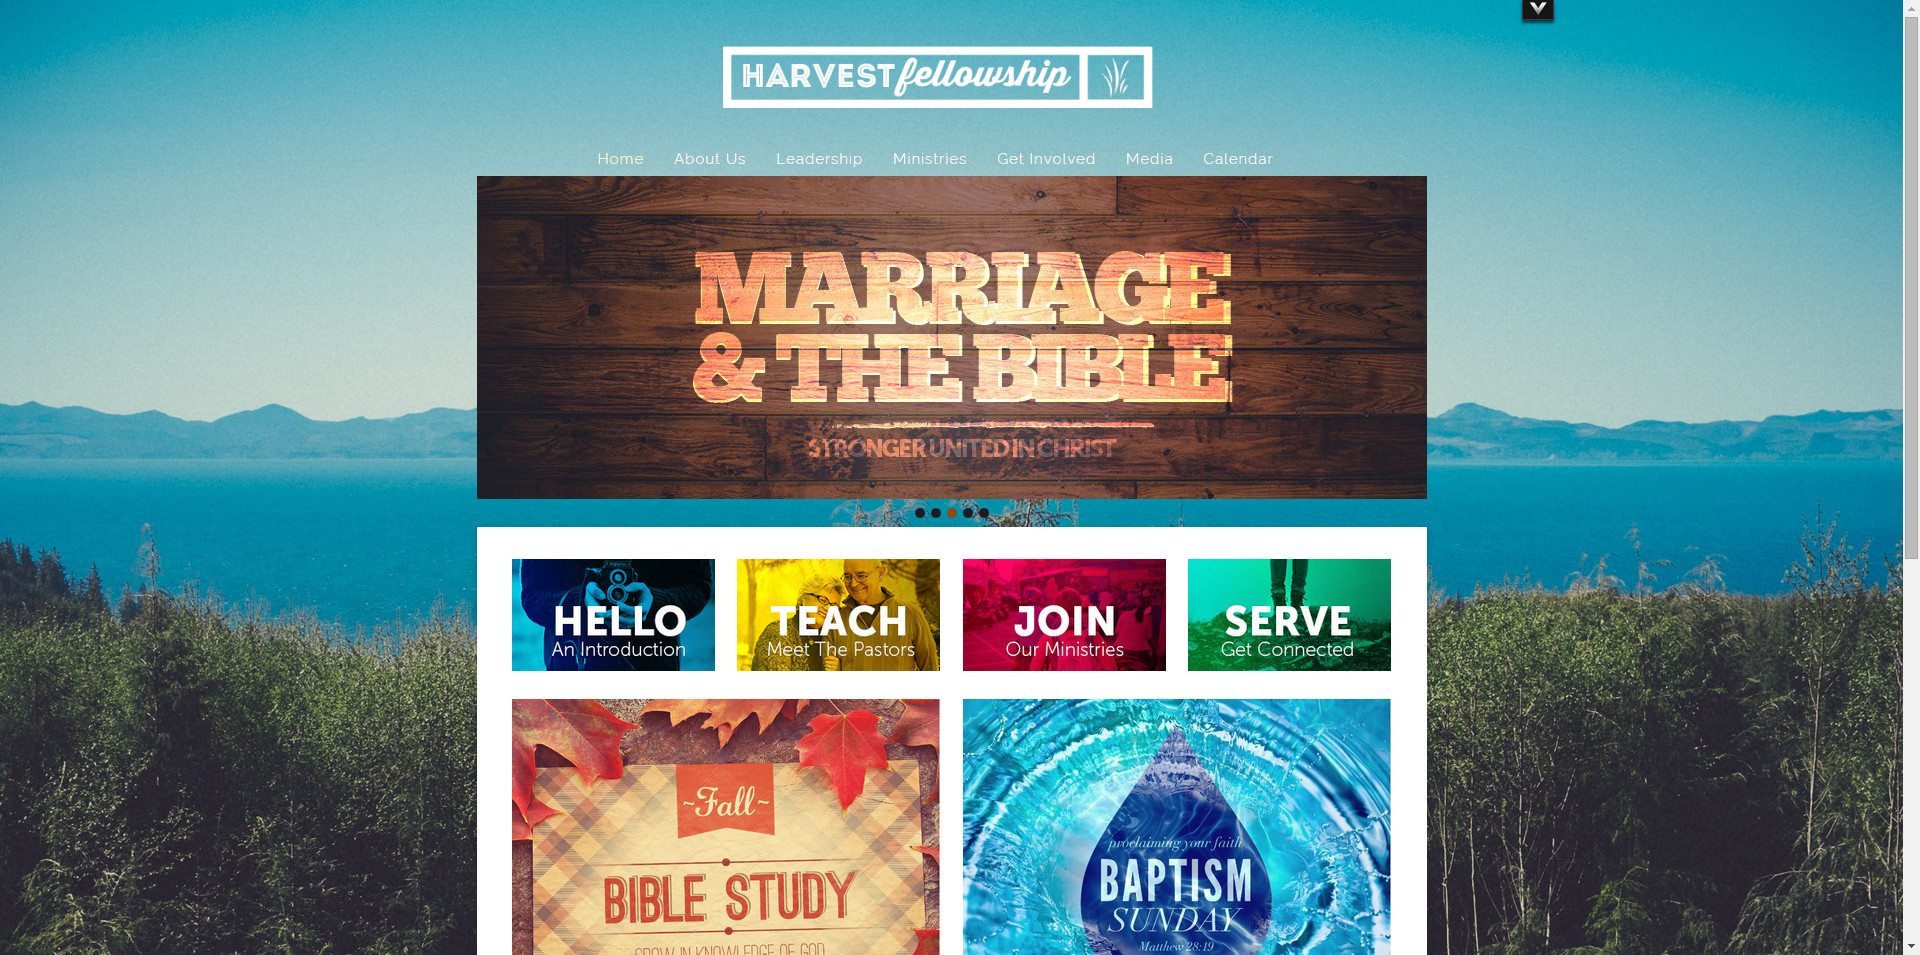 Harvest Fellowship Visual Church Website Template